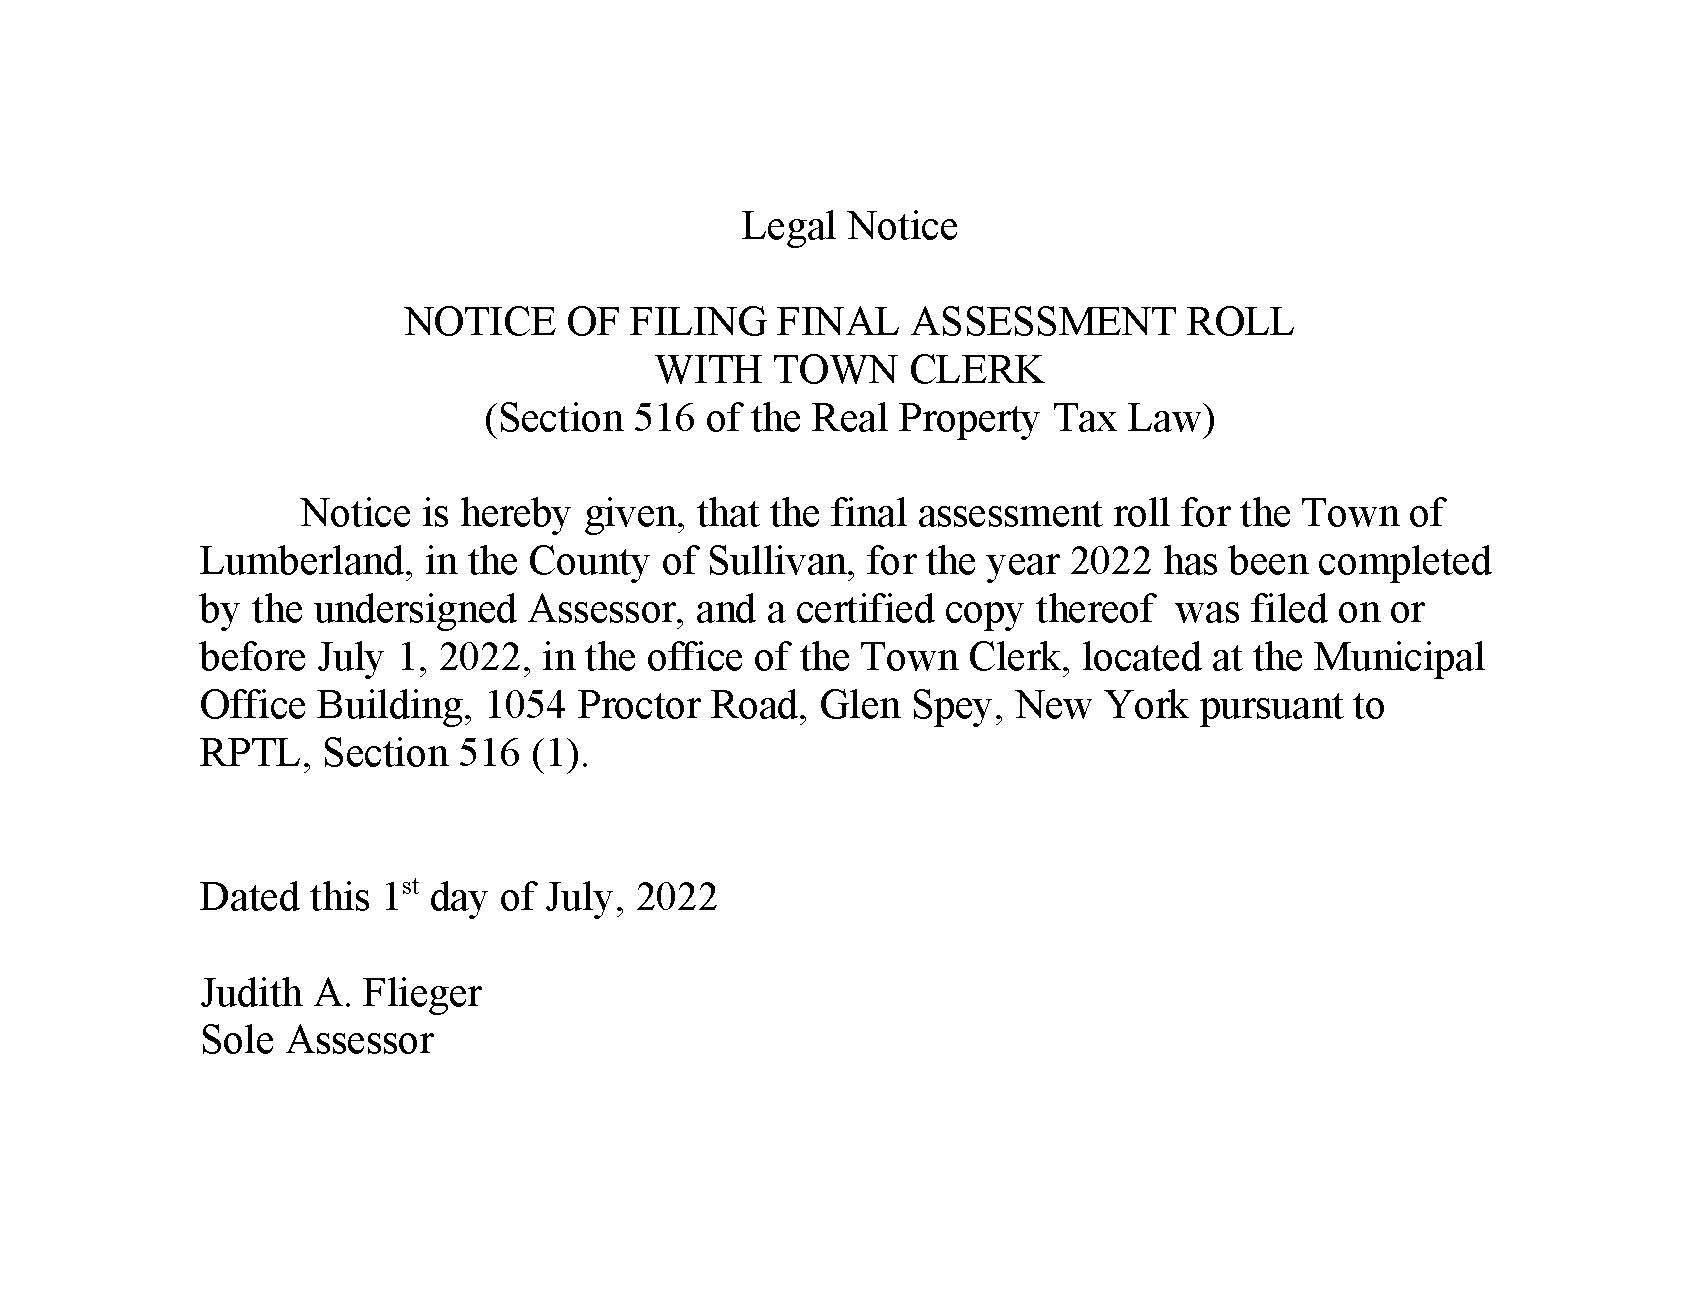 Legal Notice Final Roll 2022 - Copy